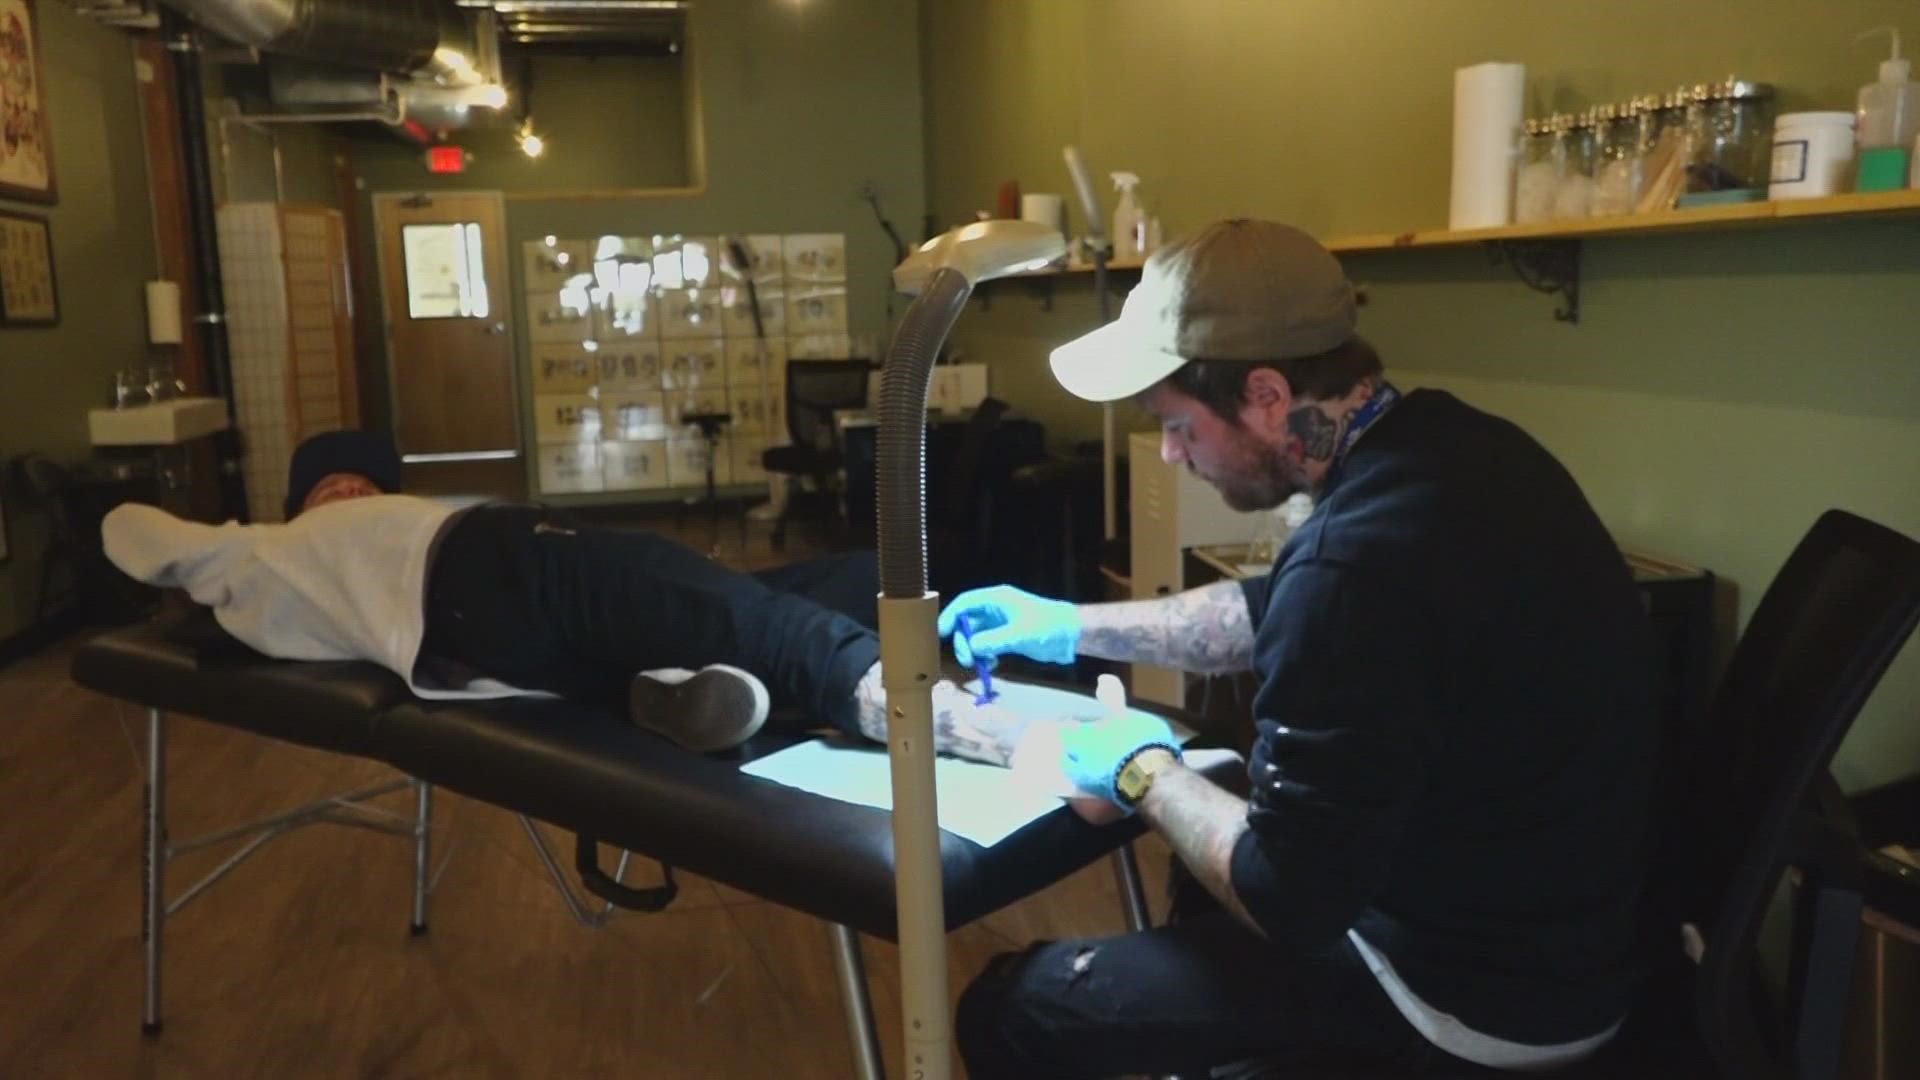 New tattoo parlor opens in Grand Rapids neighborhood 